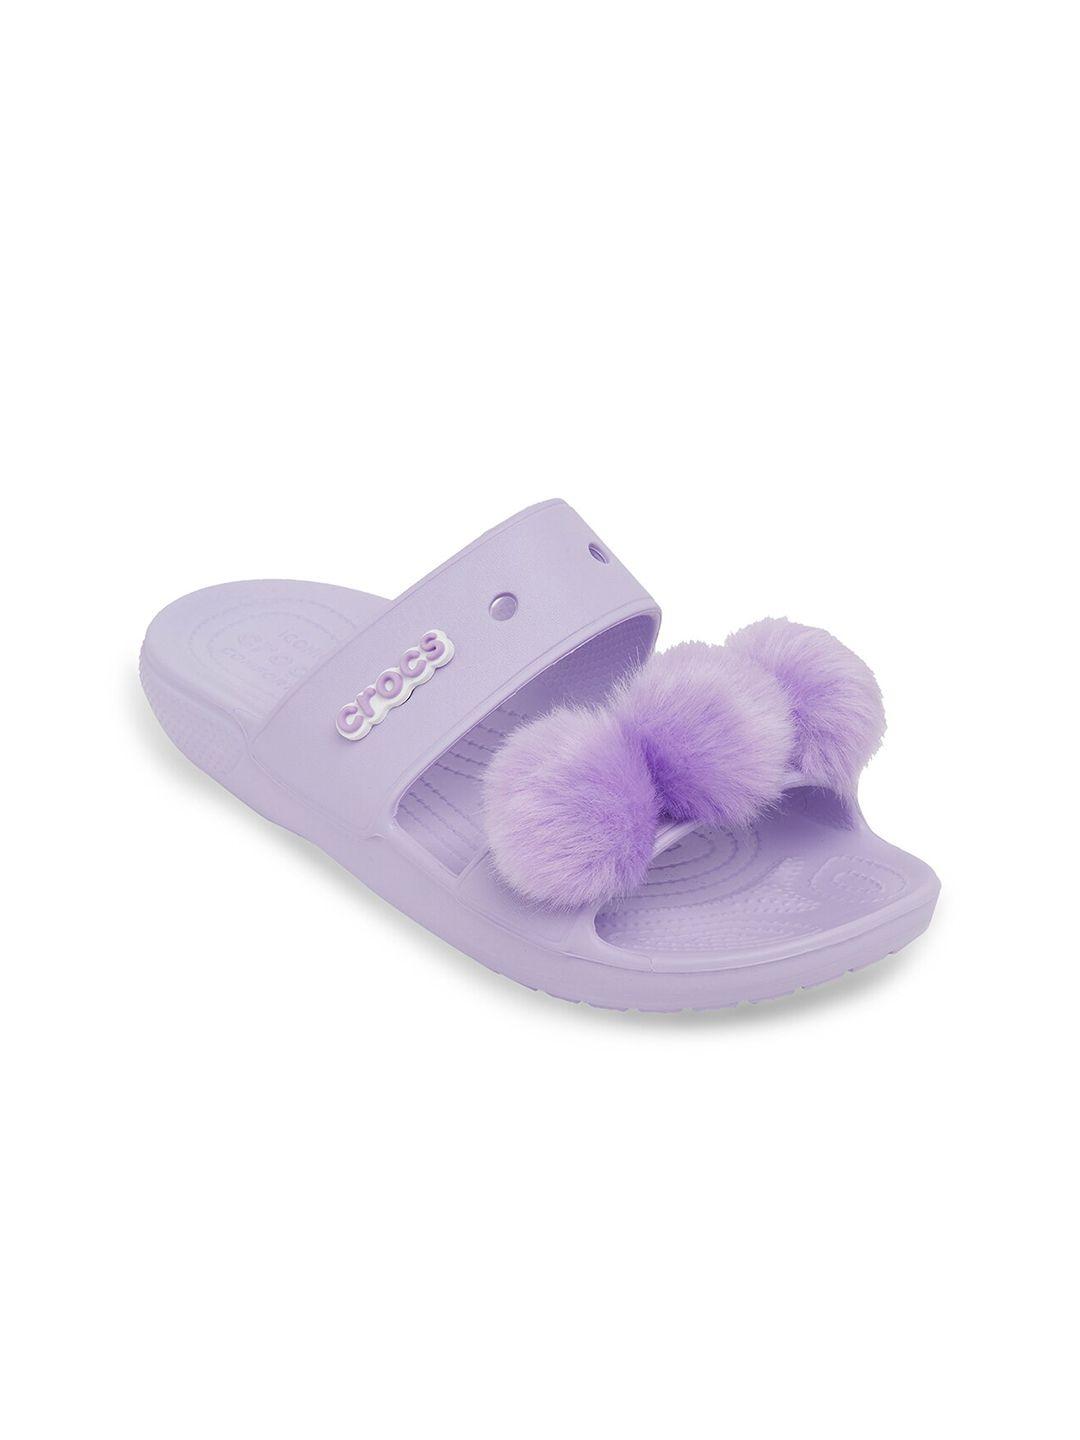 crocs classic unisex purple comfort sandals